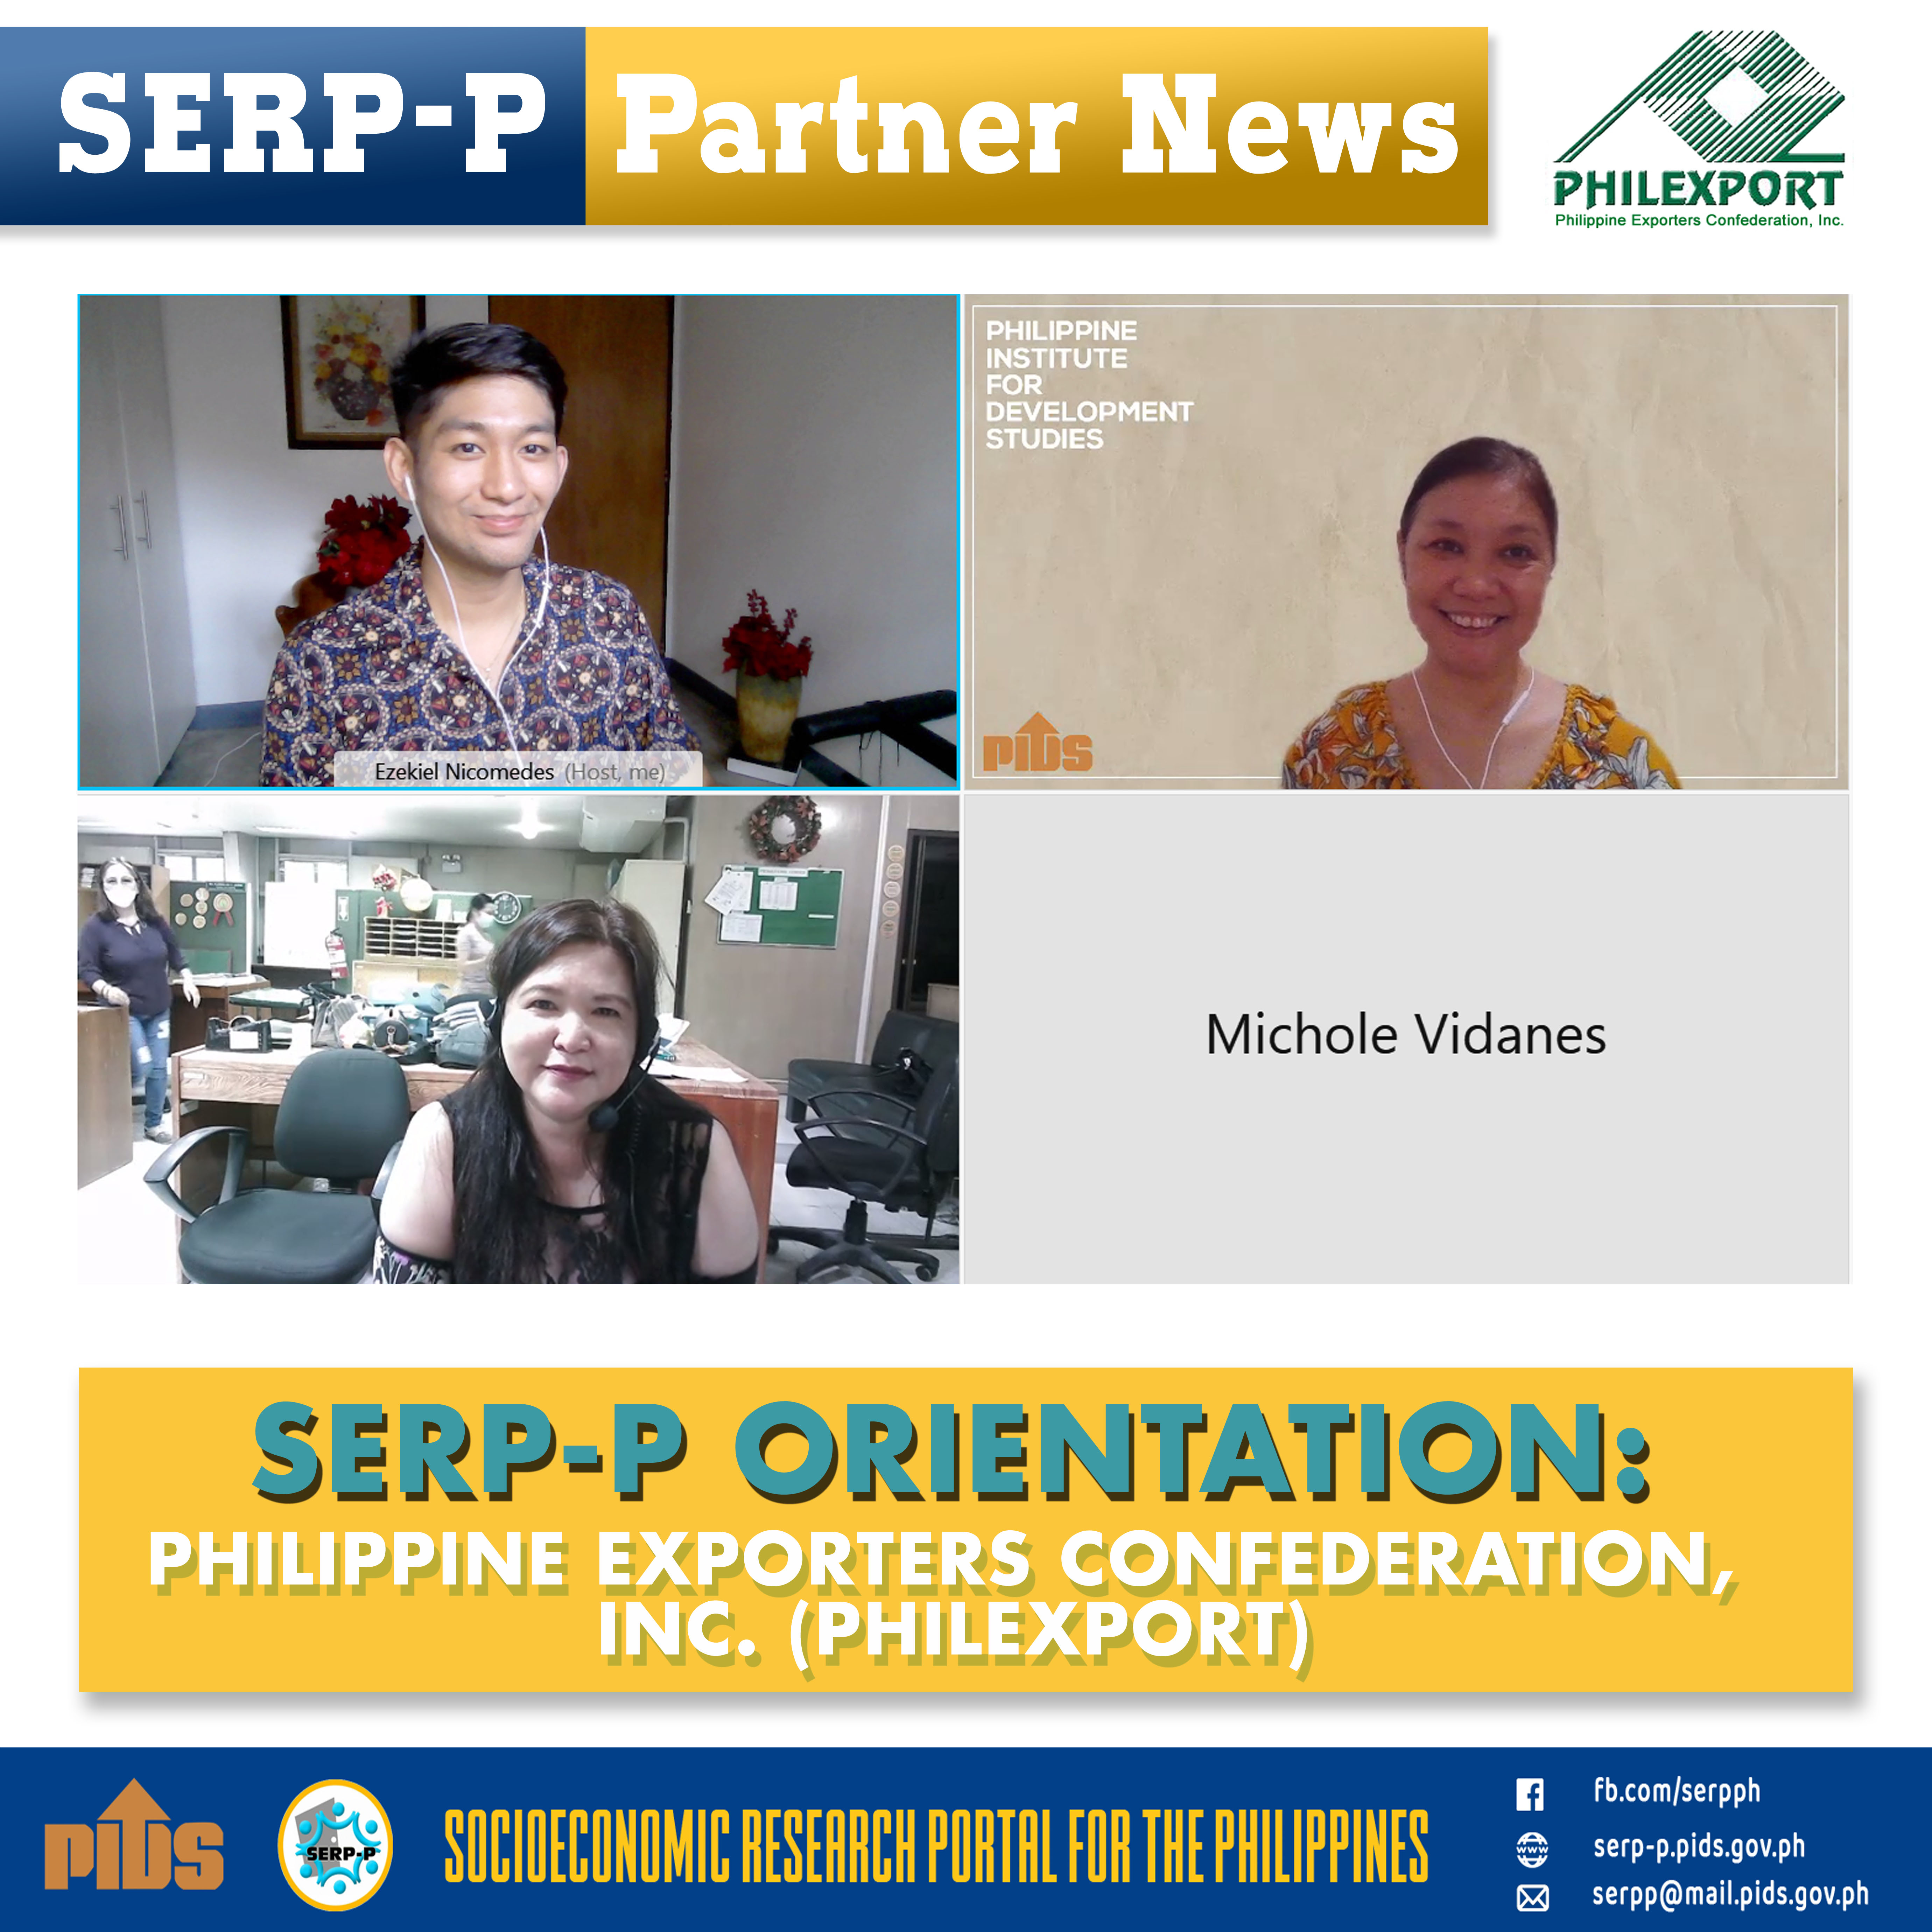 SERP-P Orientation with Philippine Exporters Confederation Inc. (PhilExport)-serp-p orientation philxexport.jpg